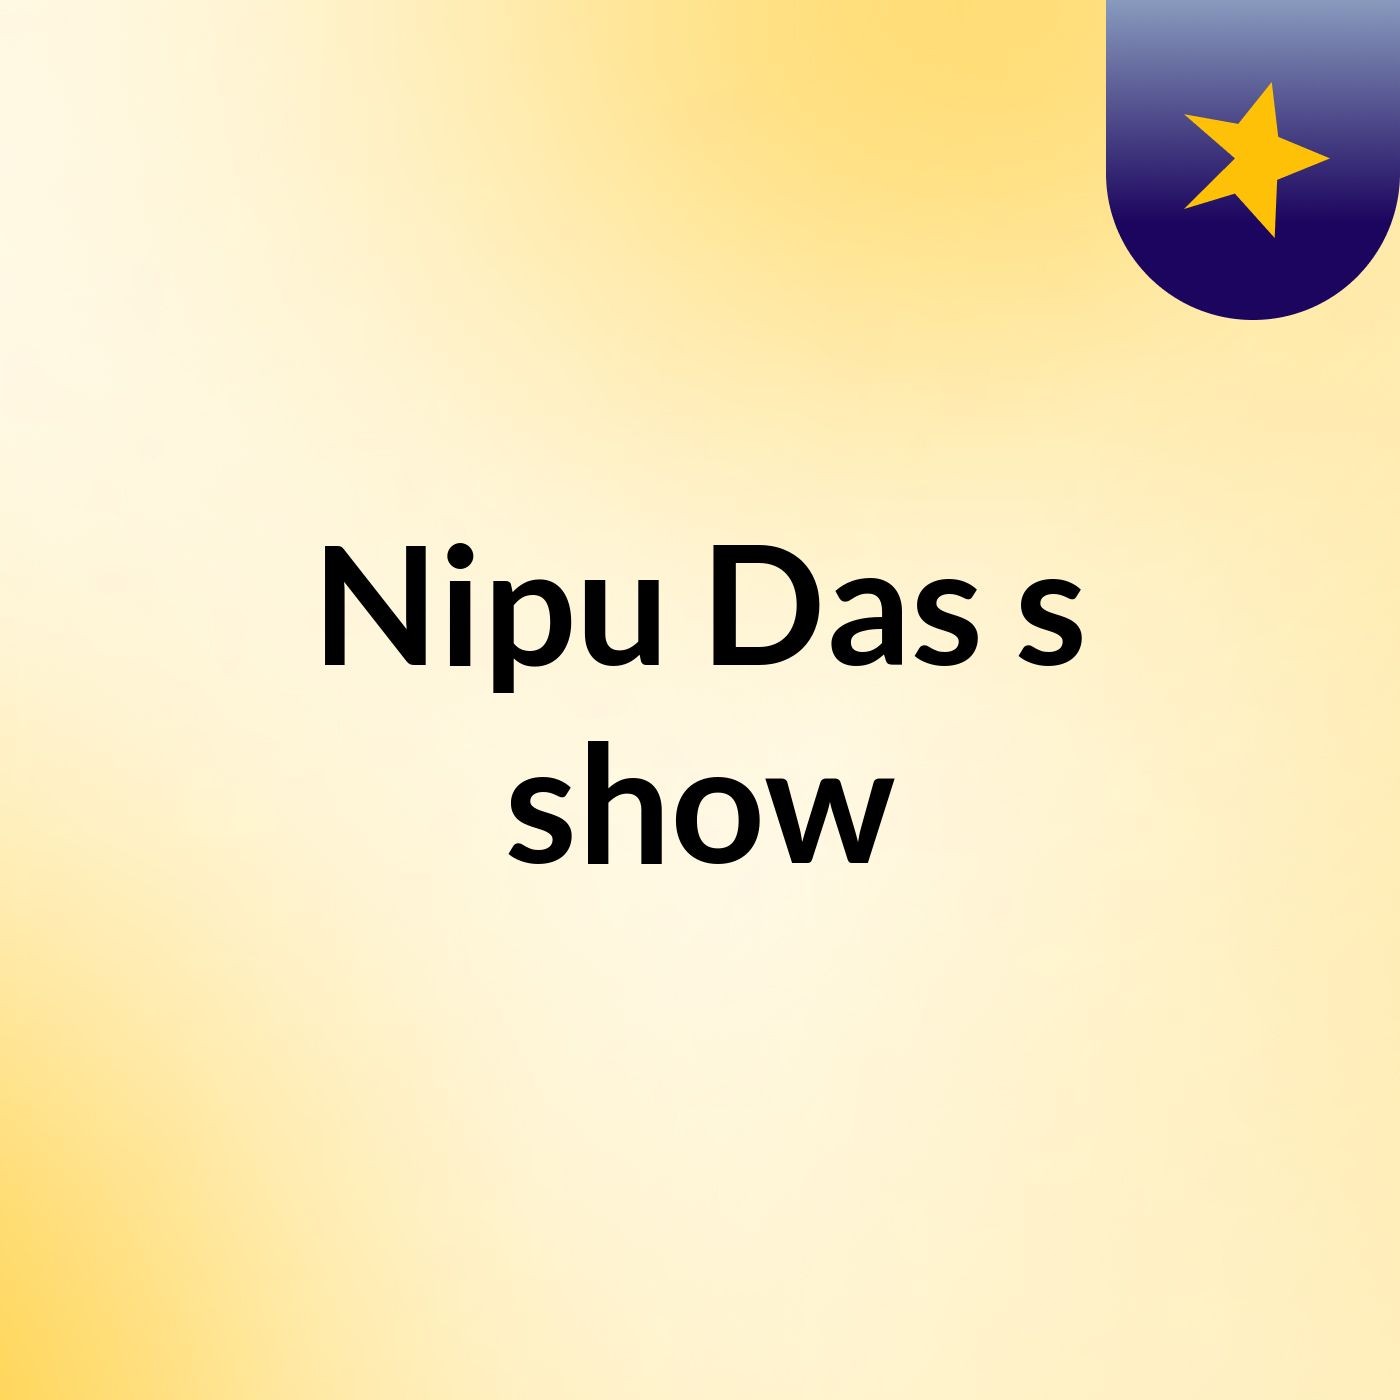 Nipu Das's show